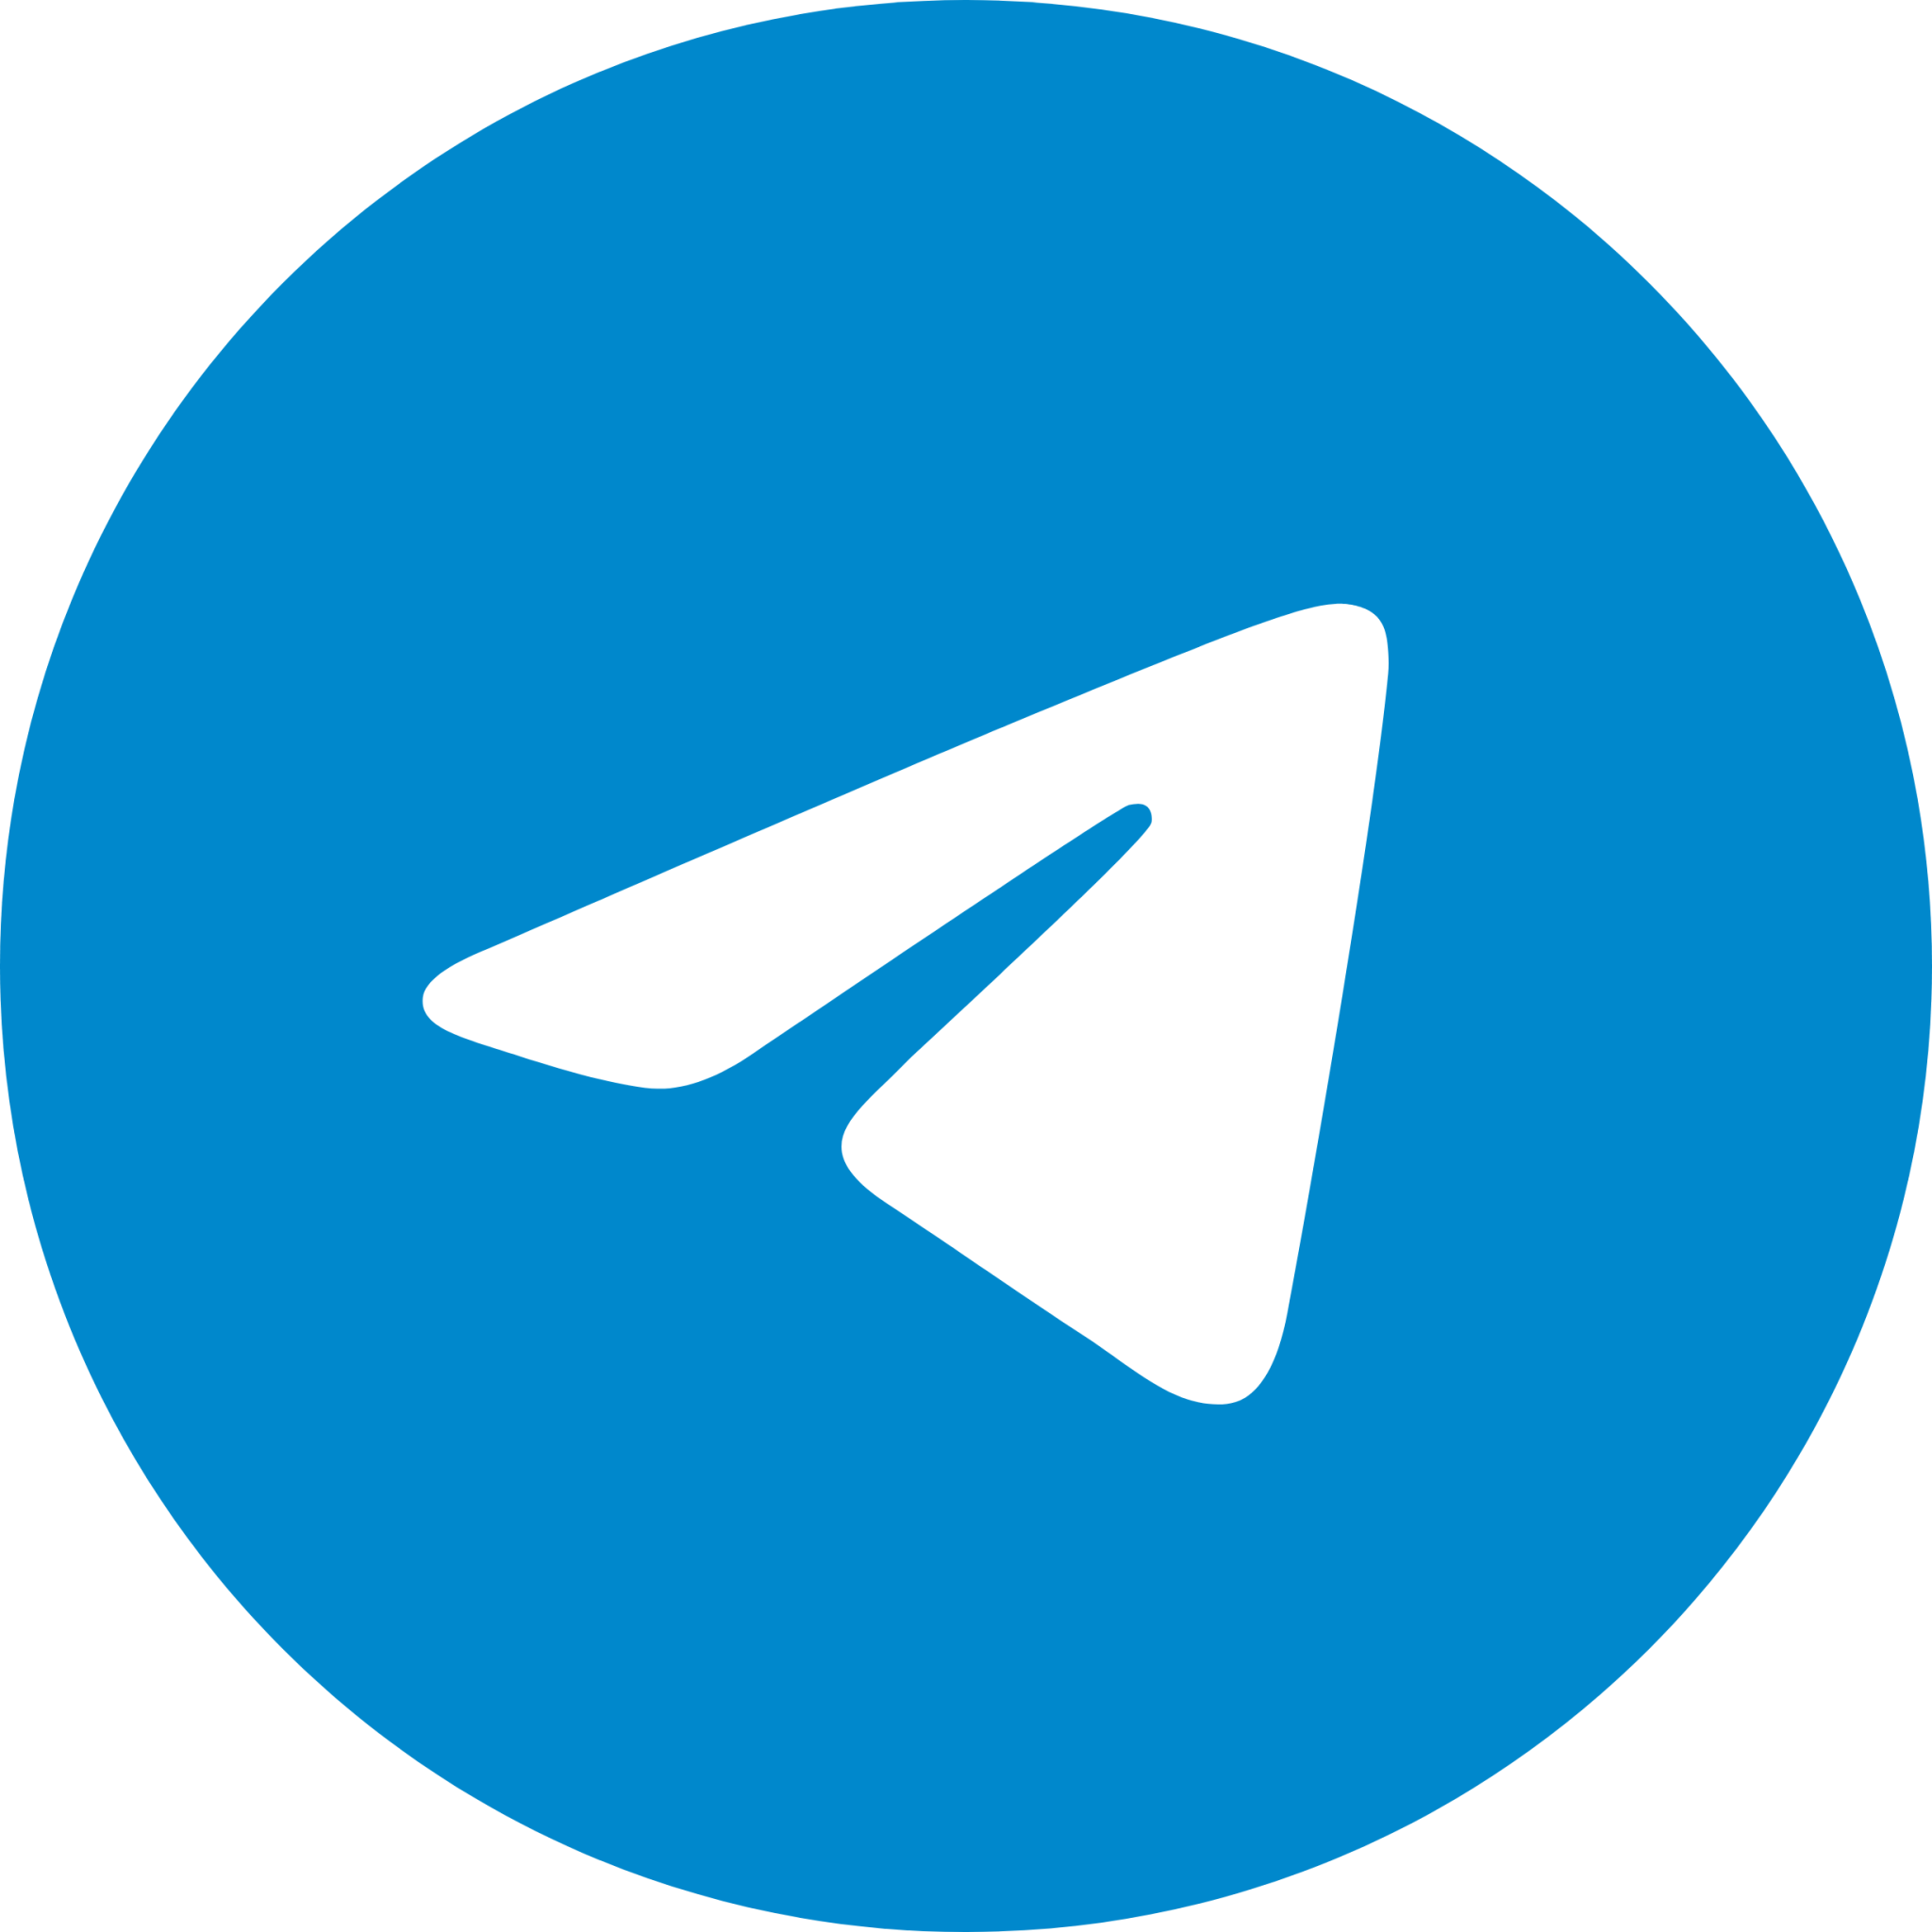 Follow us on Telegram